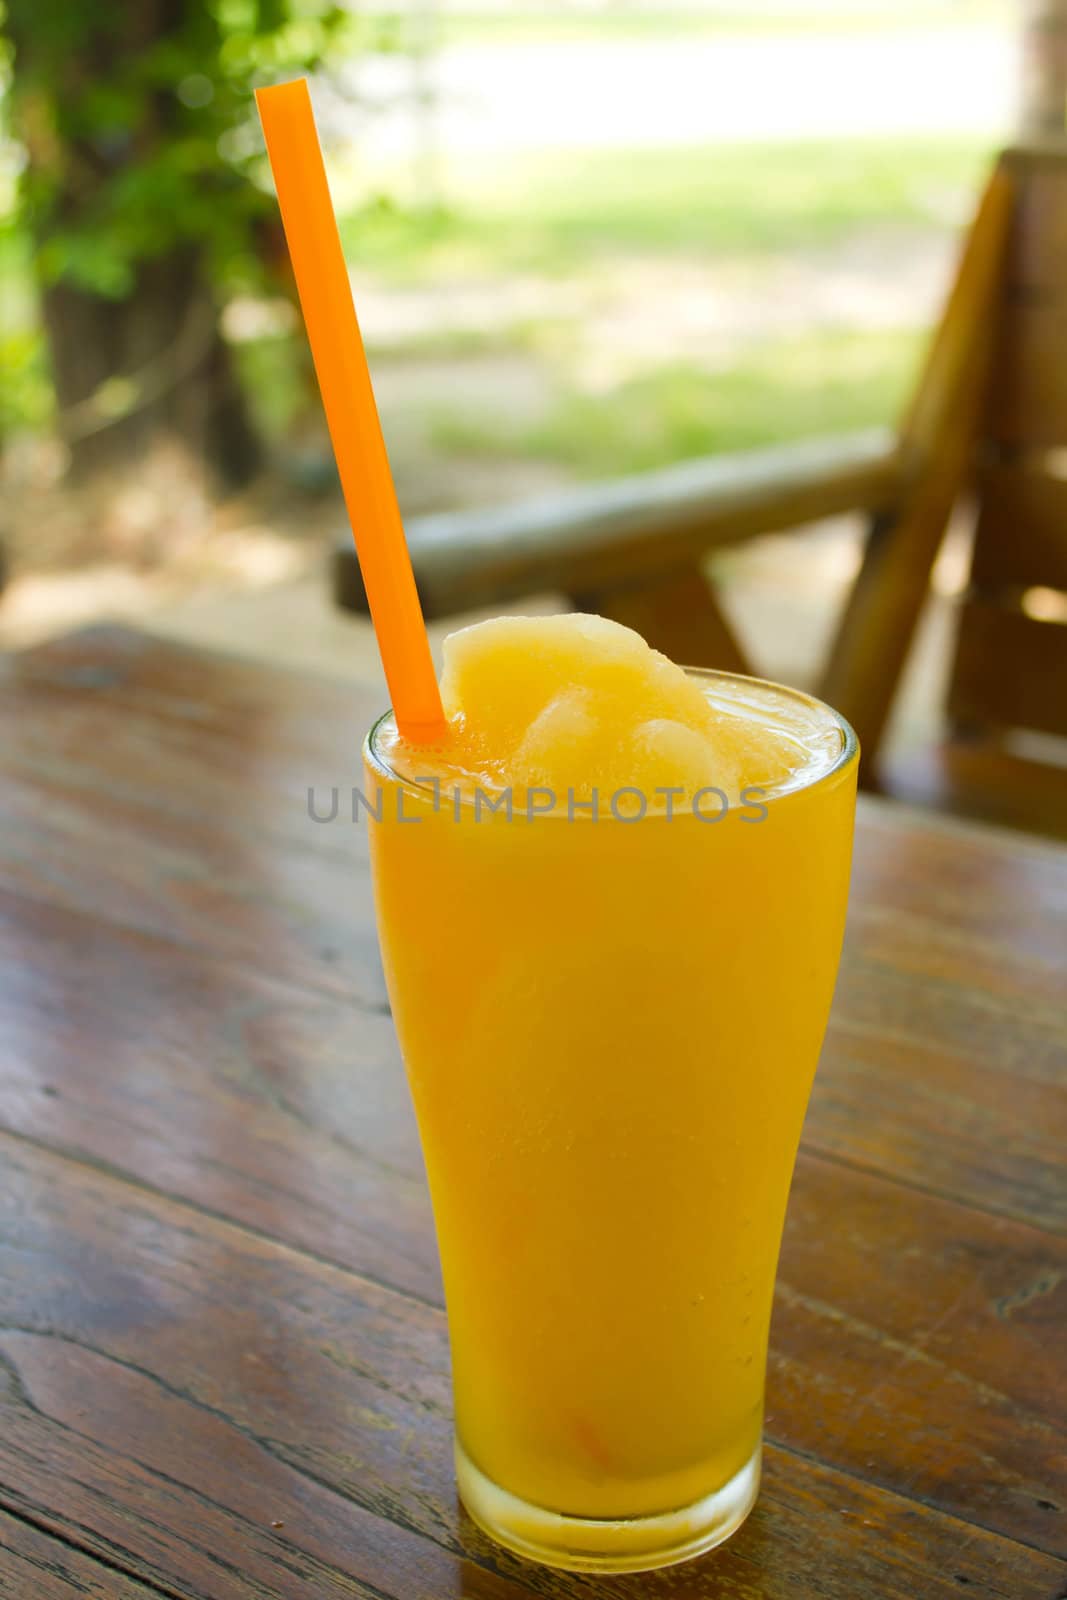 Stock Photo - Orange juice smoothie